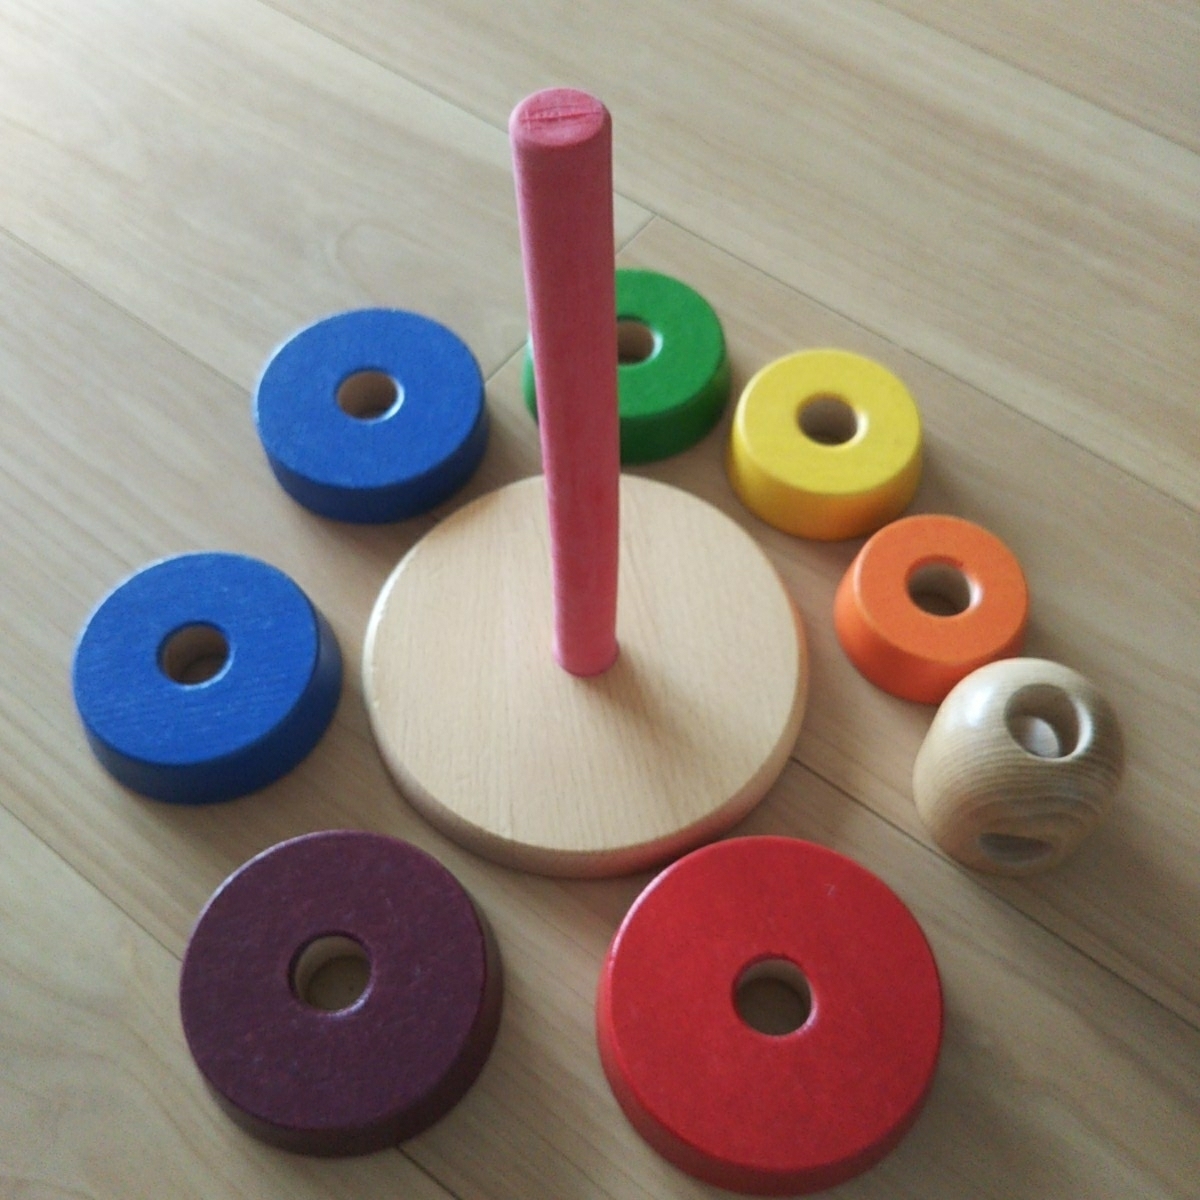 IKEA 幼児 玩具 おもちゃ カラフル 穴通し 木製 手先器用さ 形認識 物の重さや重なりあう時の音認識 感性豊かに_画像3